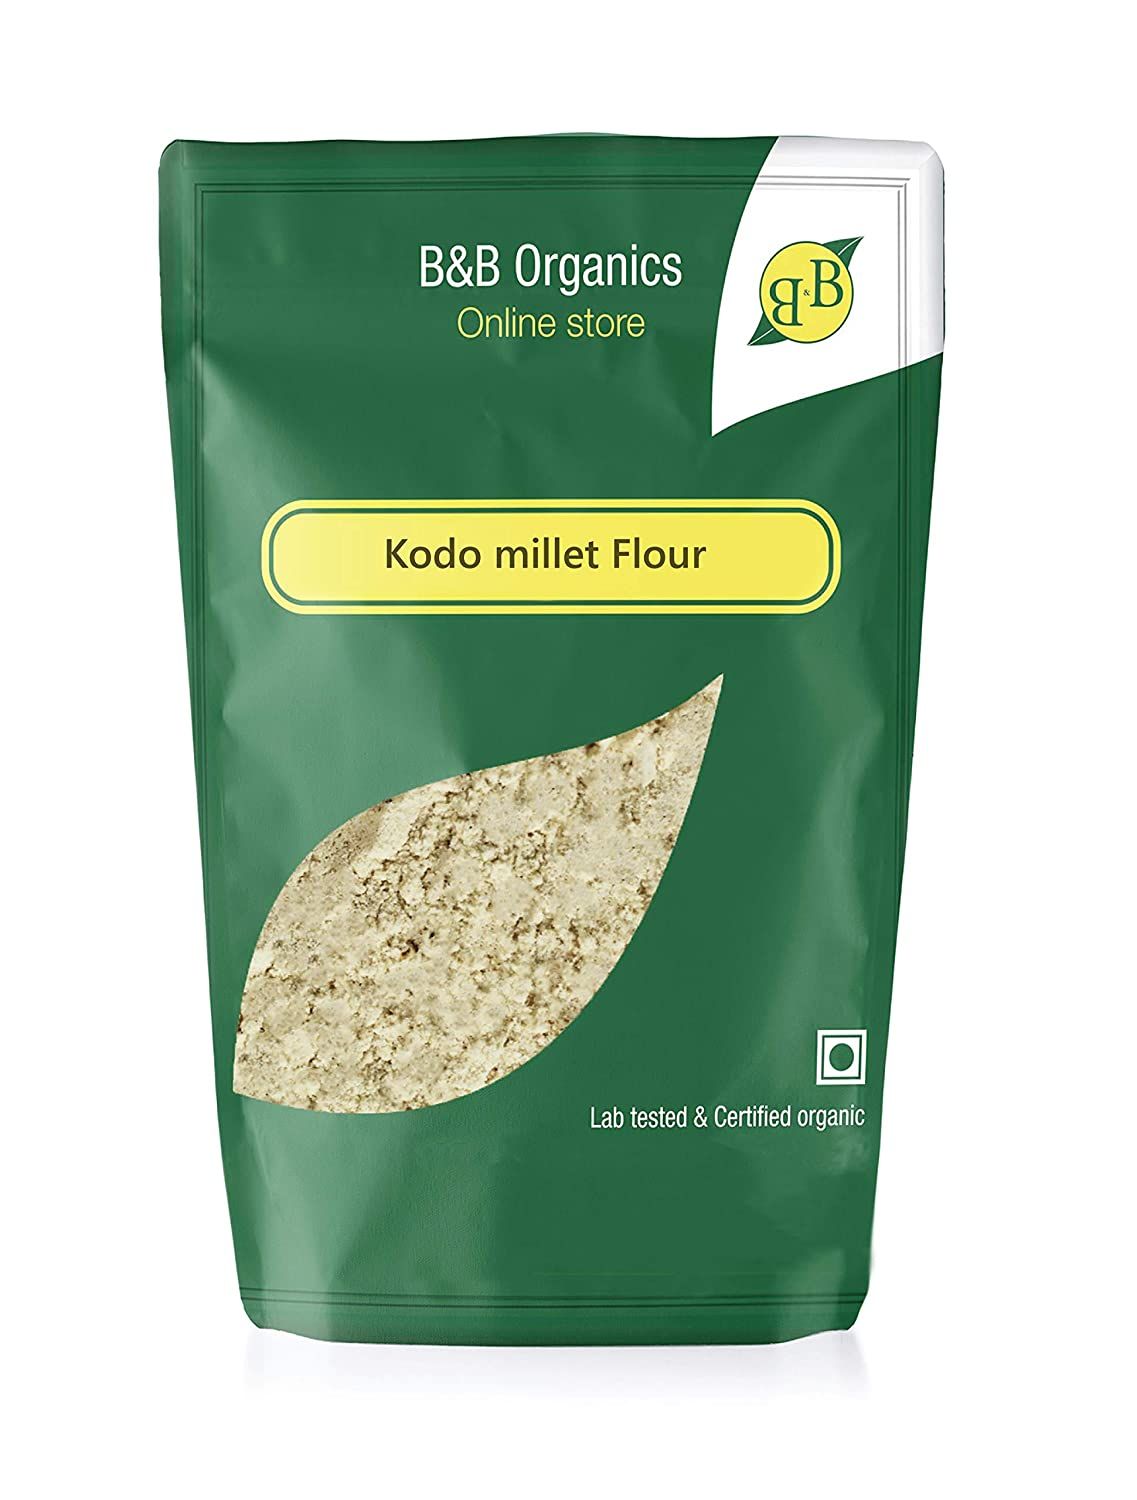 B&B Organics Kodo Millet Flour Image